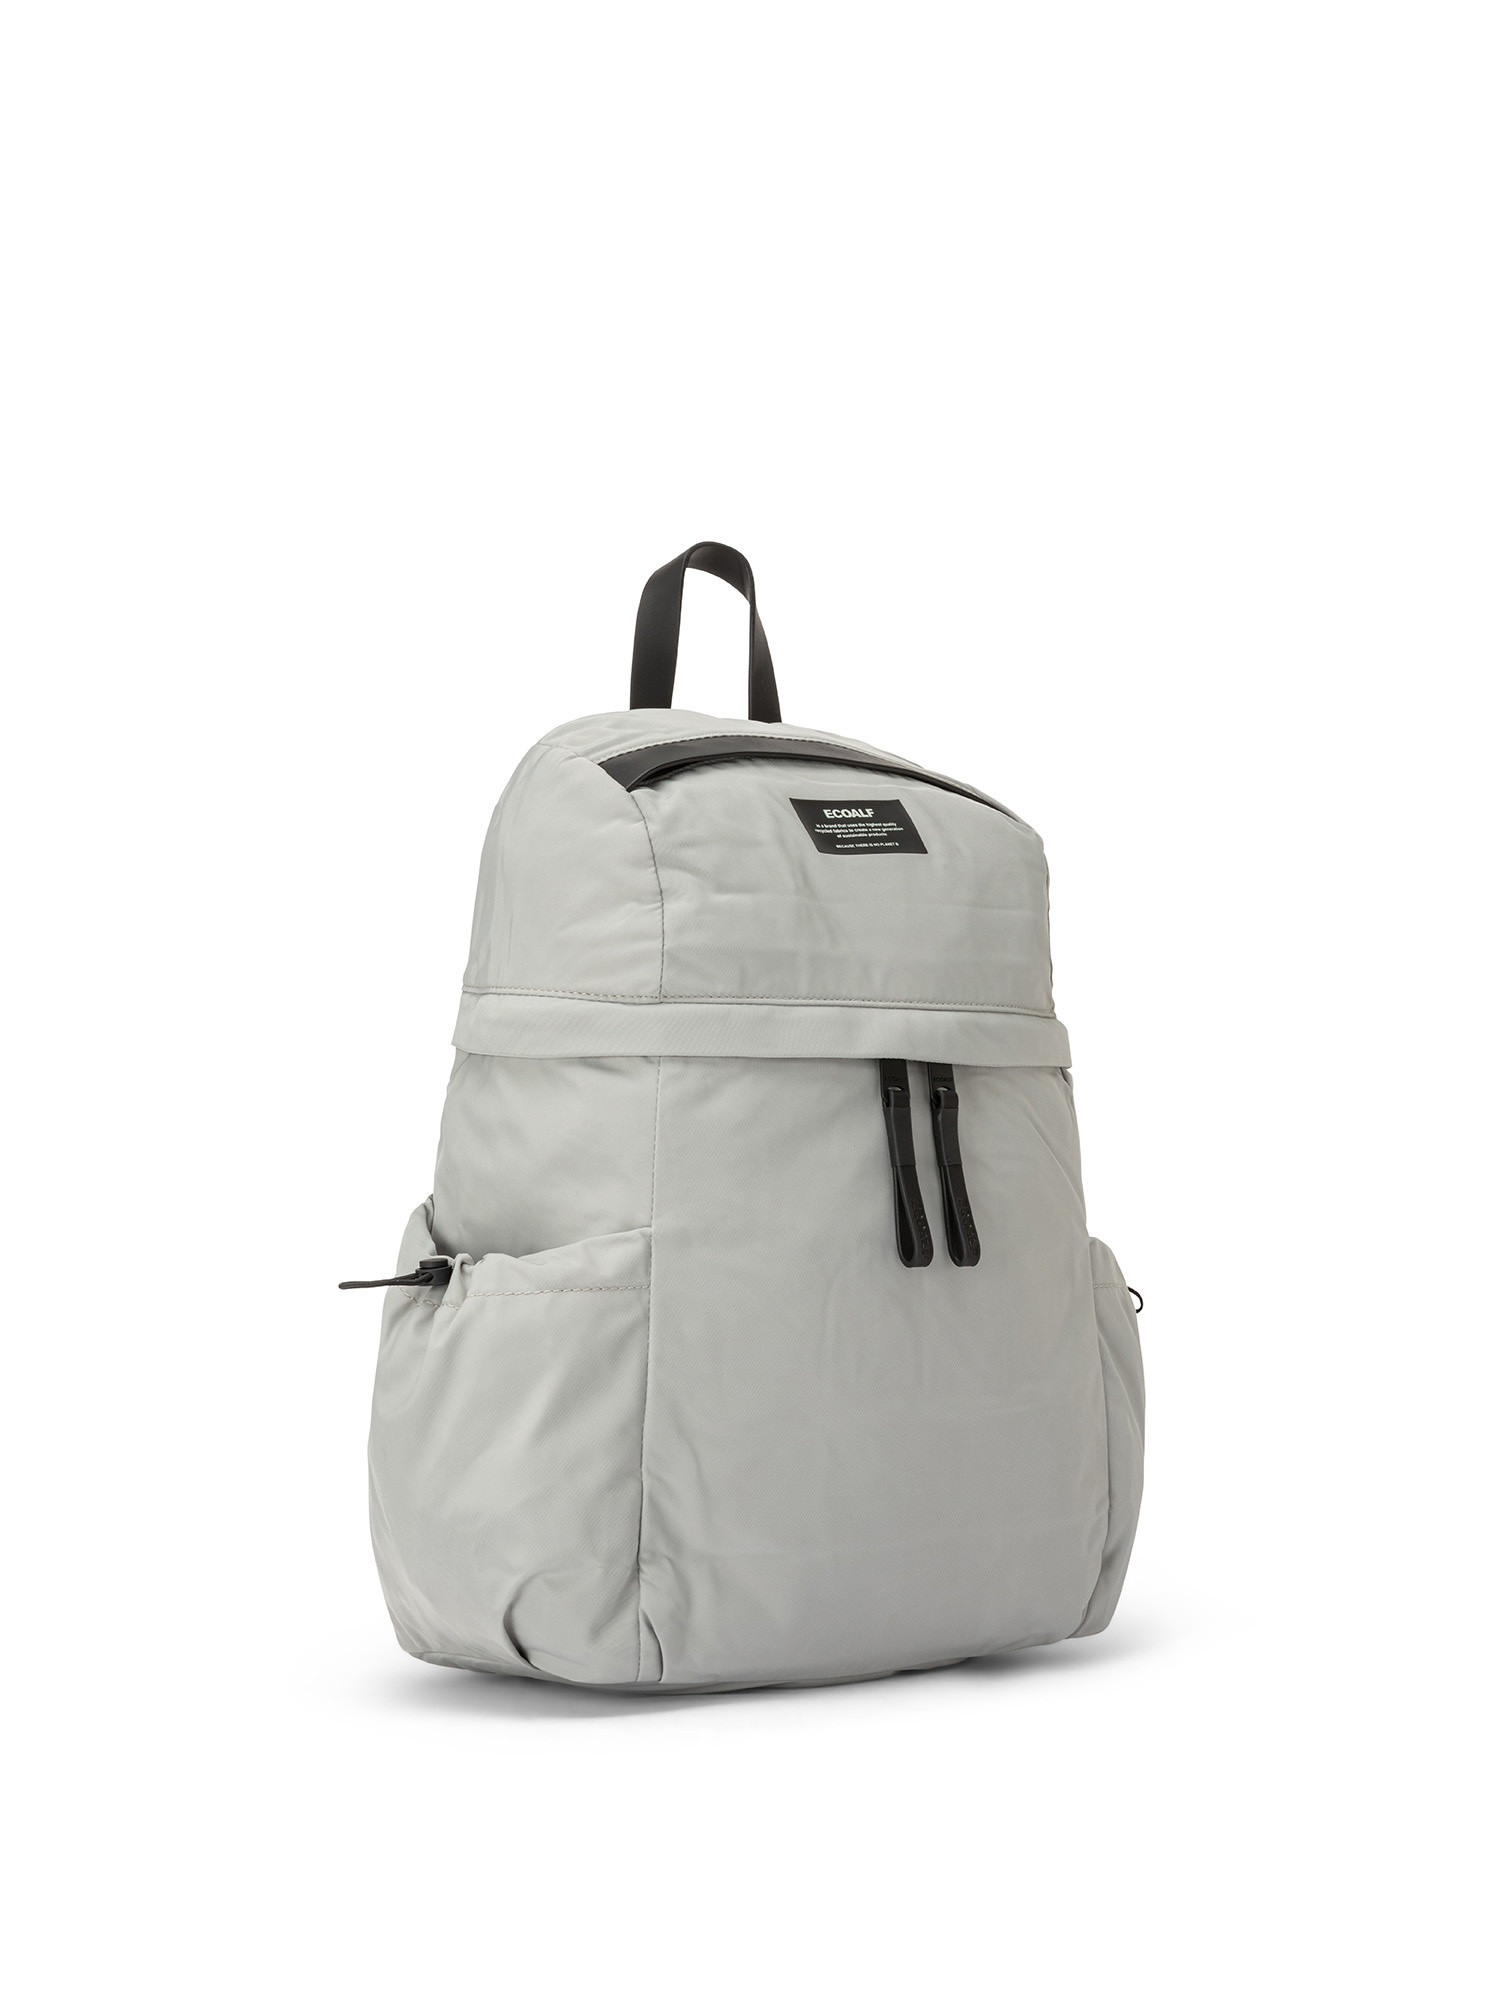 Ecoalf - Waterproof Mom Backpack, Light Green, large image number 1